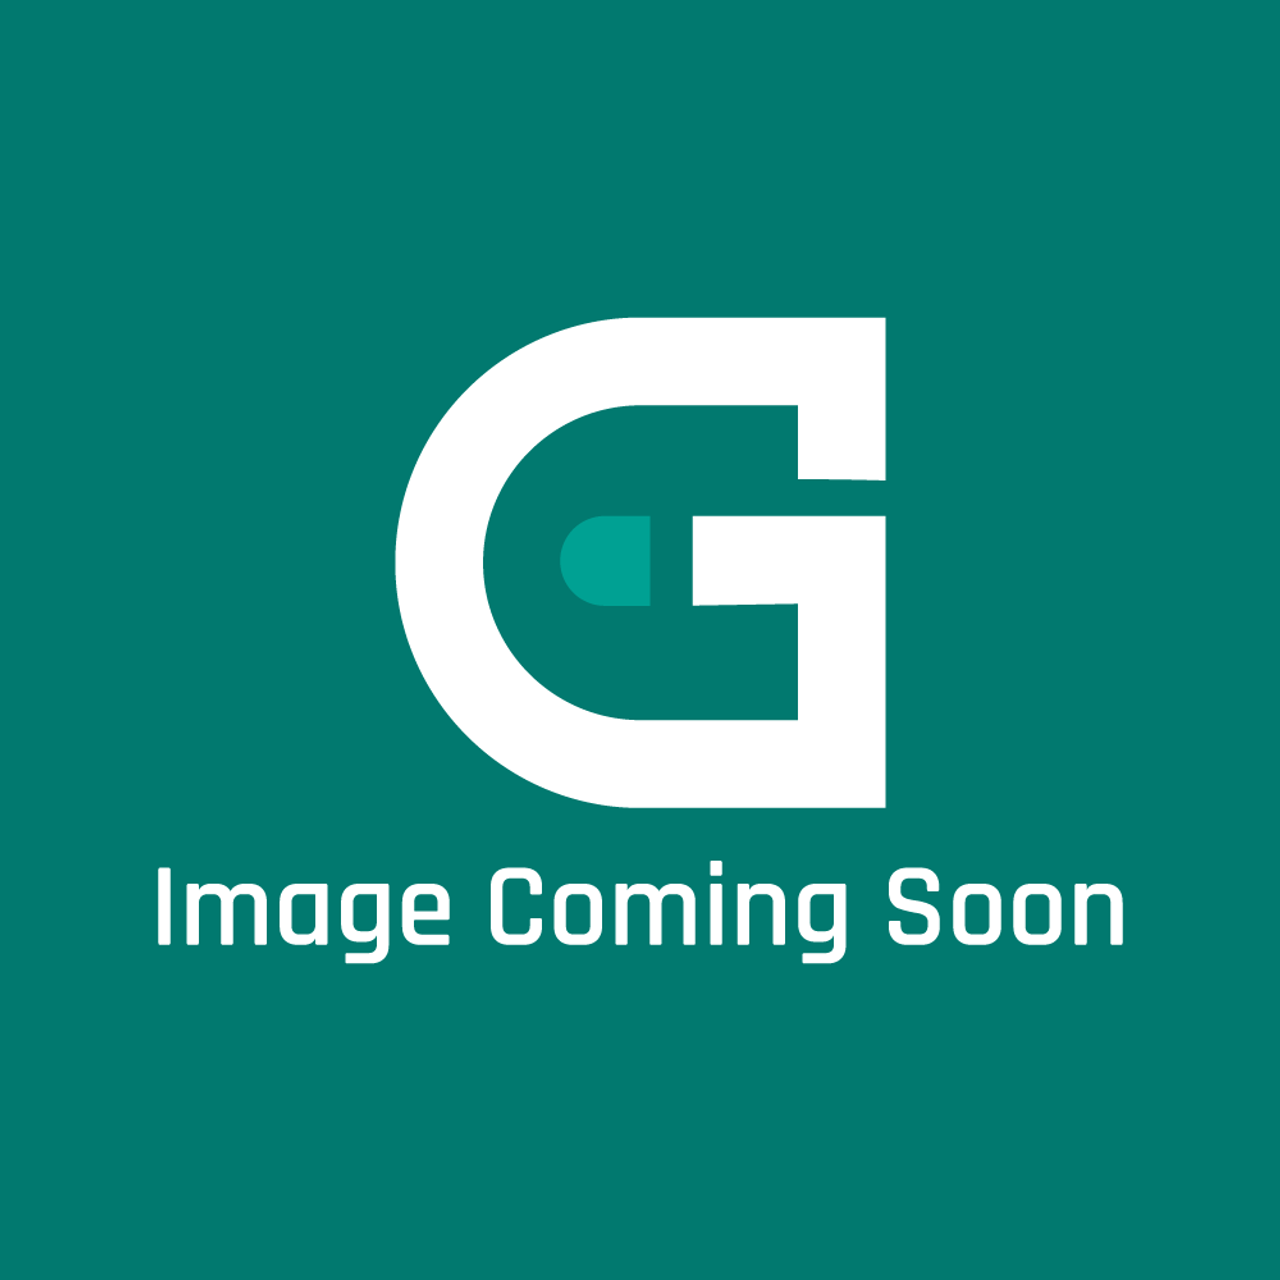 Frigidaire - Electrolux 903103-9010 Bracket Kit - Image Coming Soon!